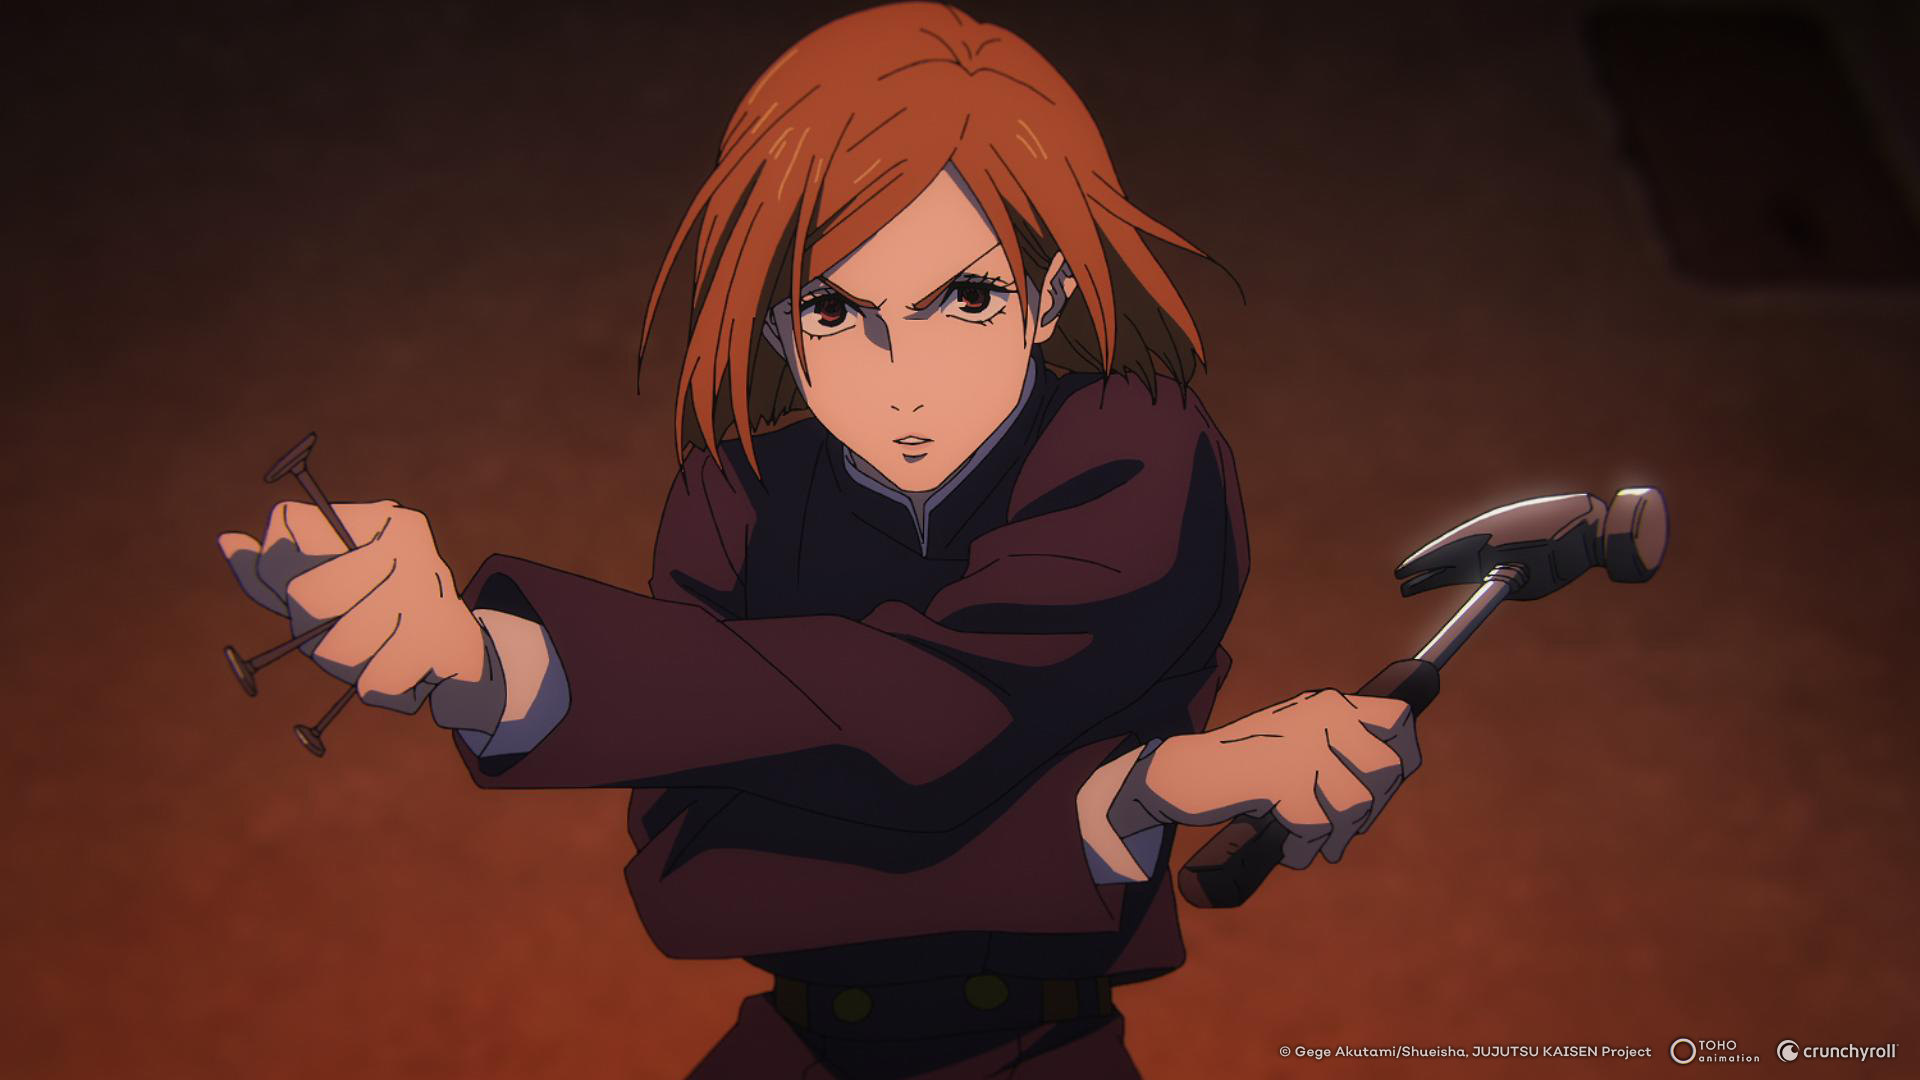 The anime character Nobara Kugisaki holds a hammer and nails in the series "Jujutsu Kaisen."